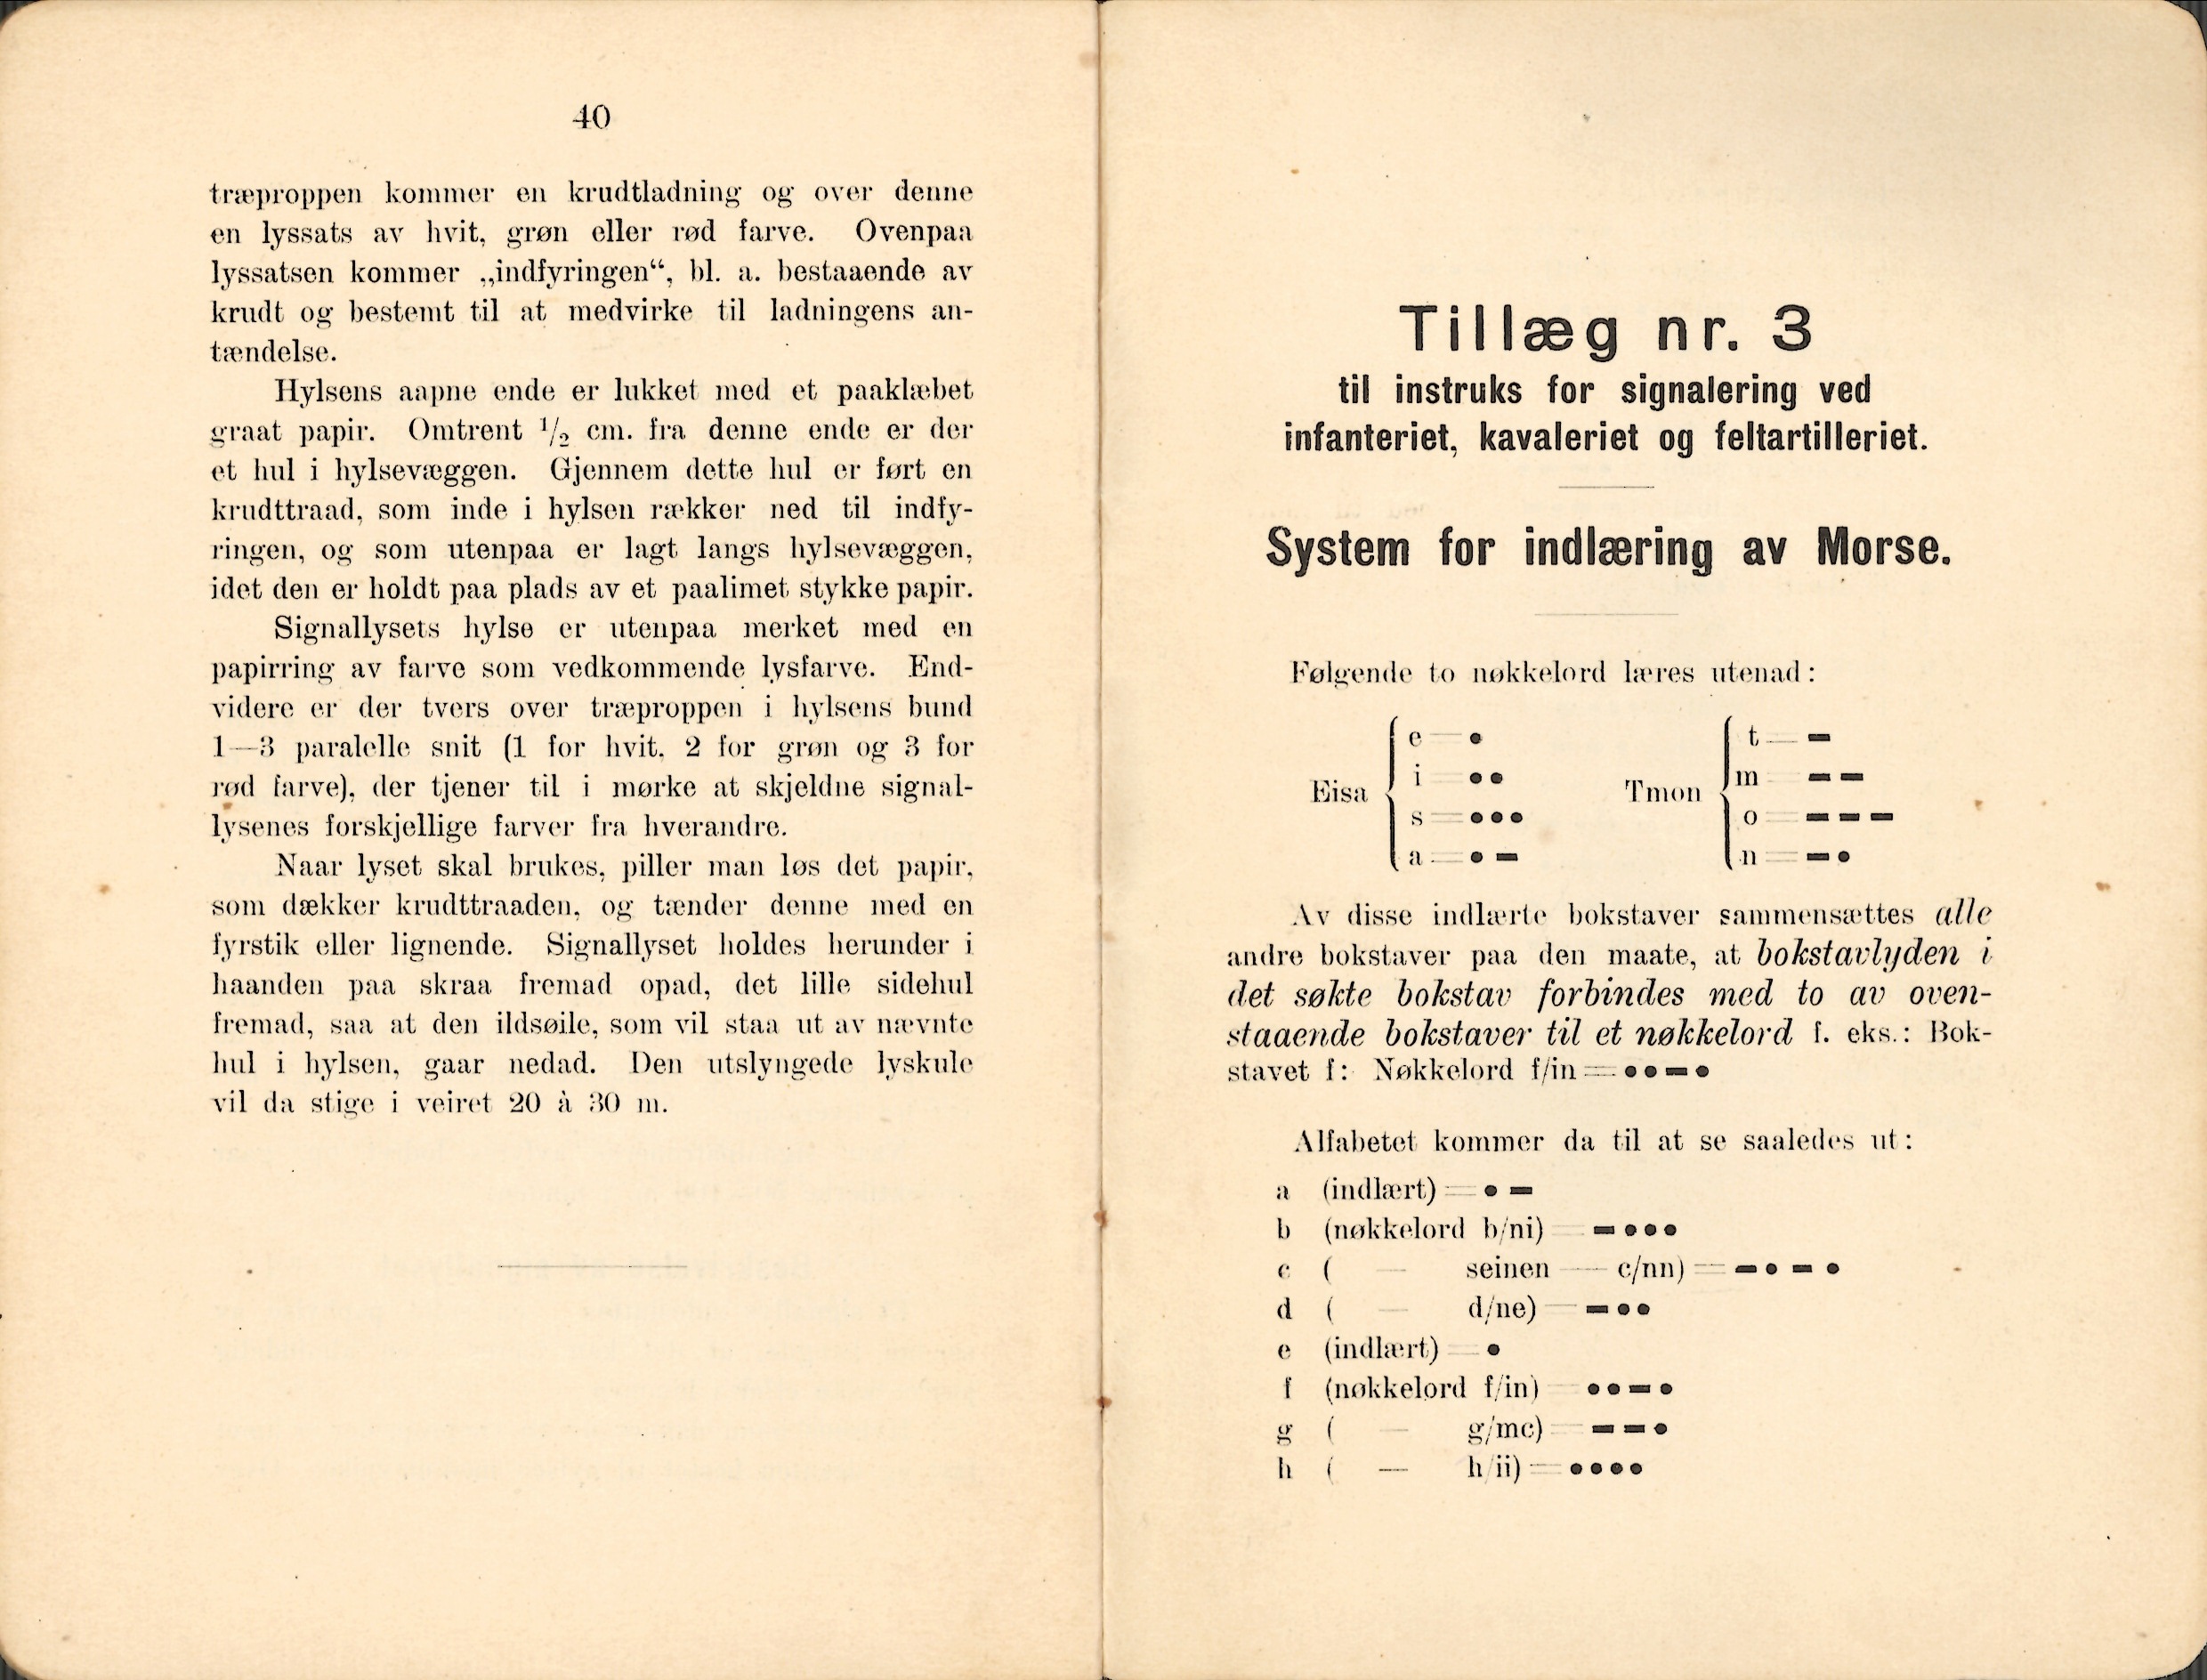 ./doc/reglement/Signal/Instruks-Signalering-1915-7.jpg